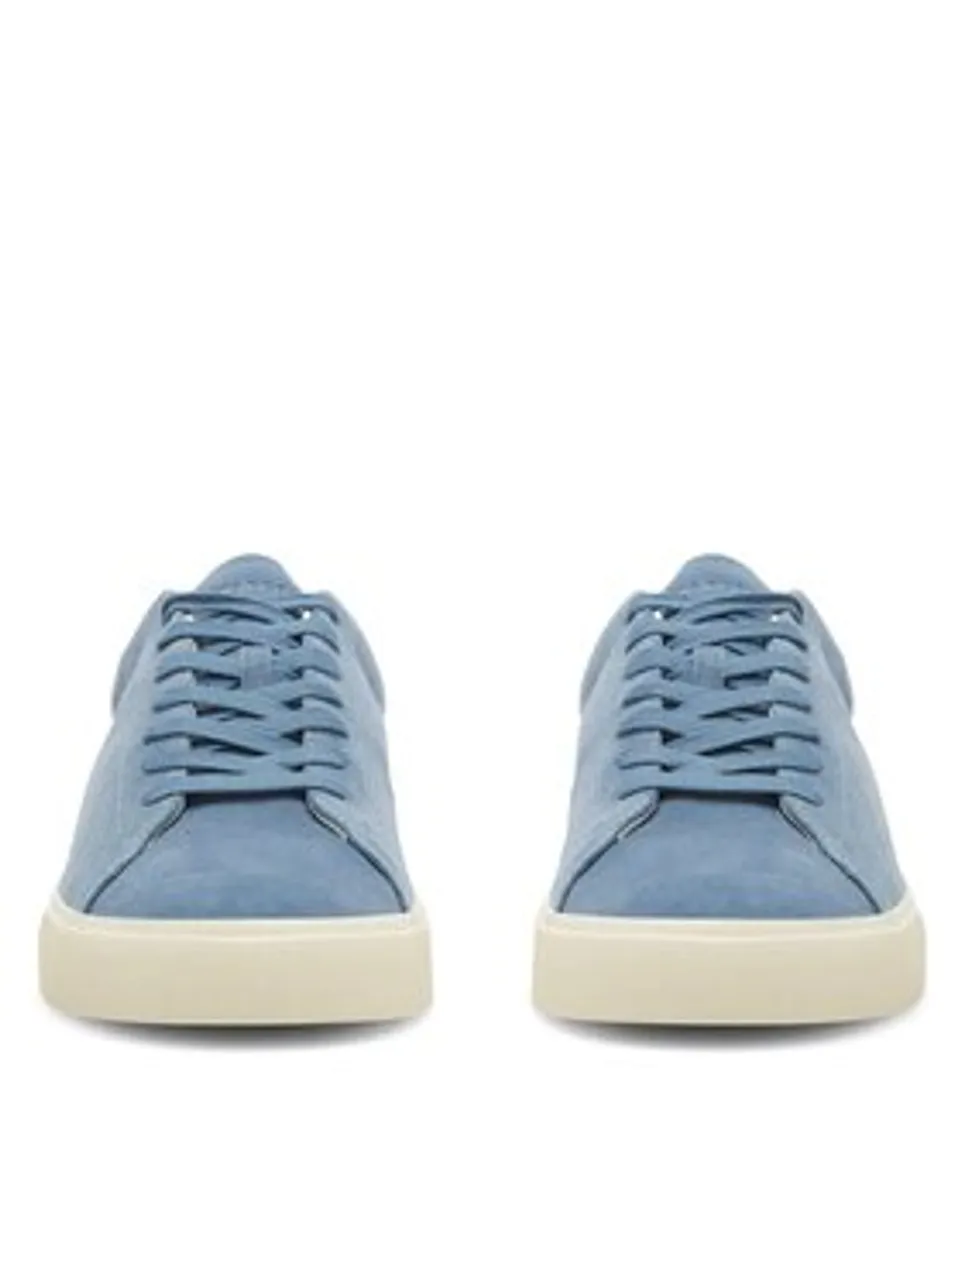 Gino Rossi Sneakers aus Stoff LUCA-02 124AM Blau